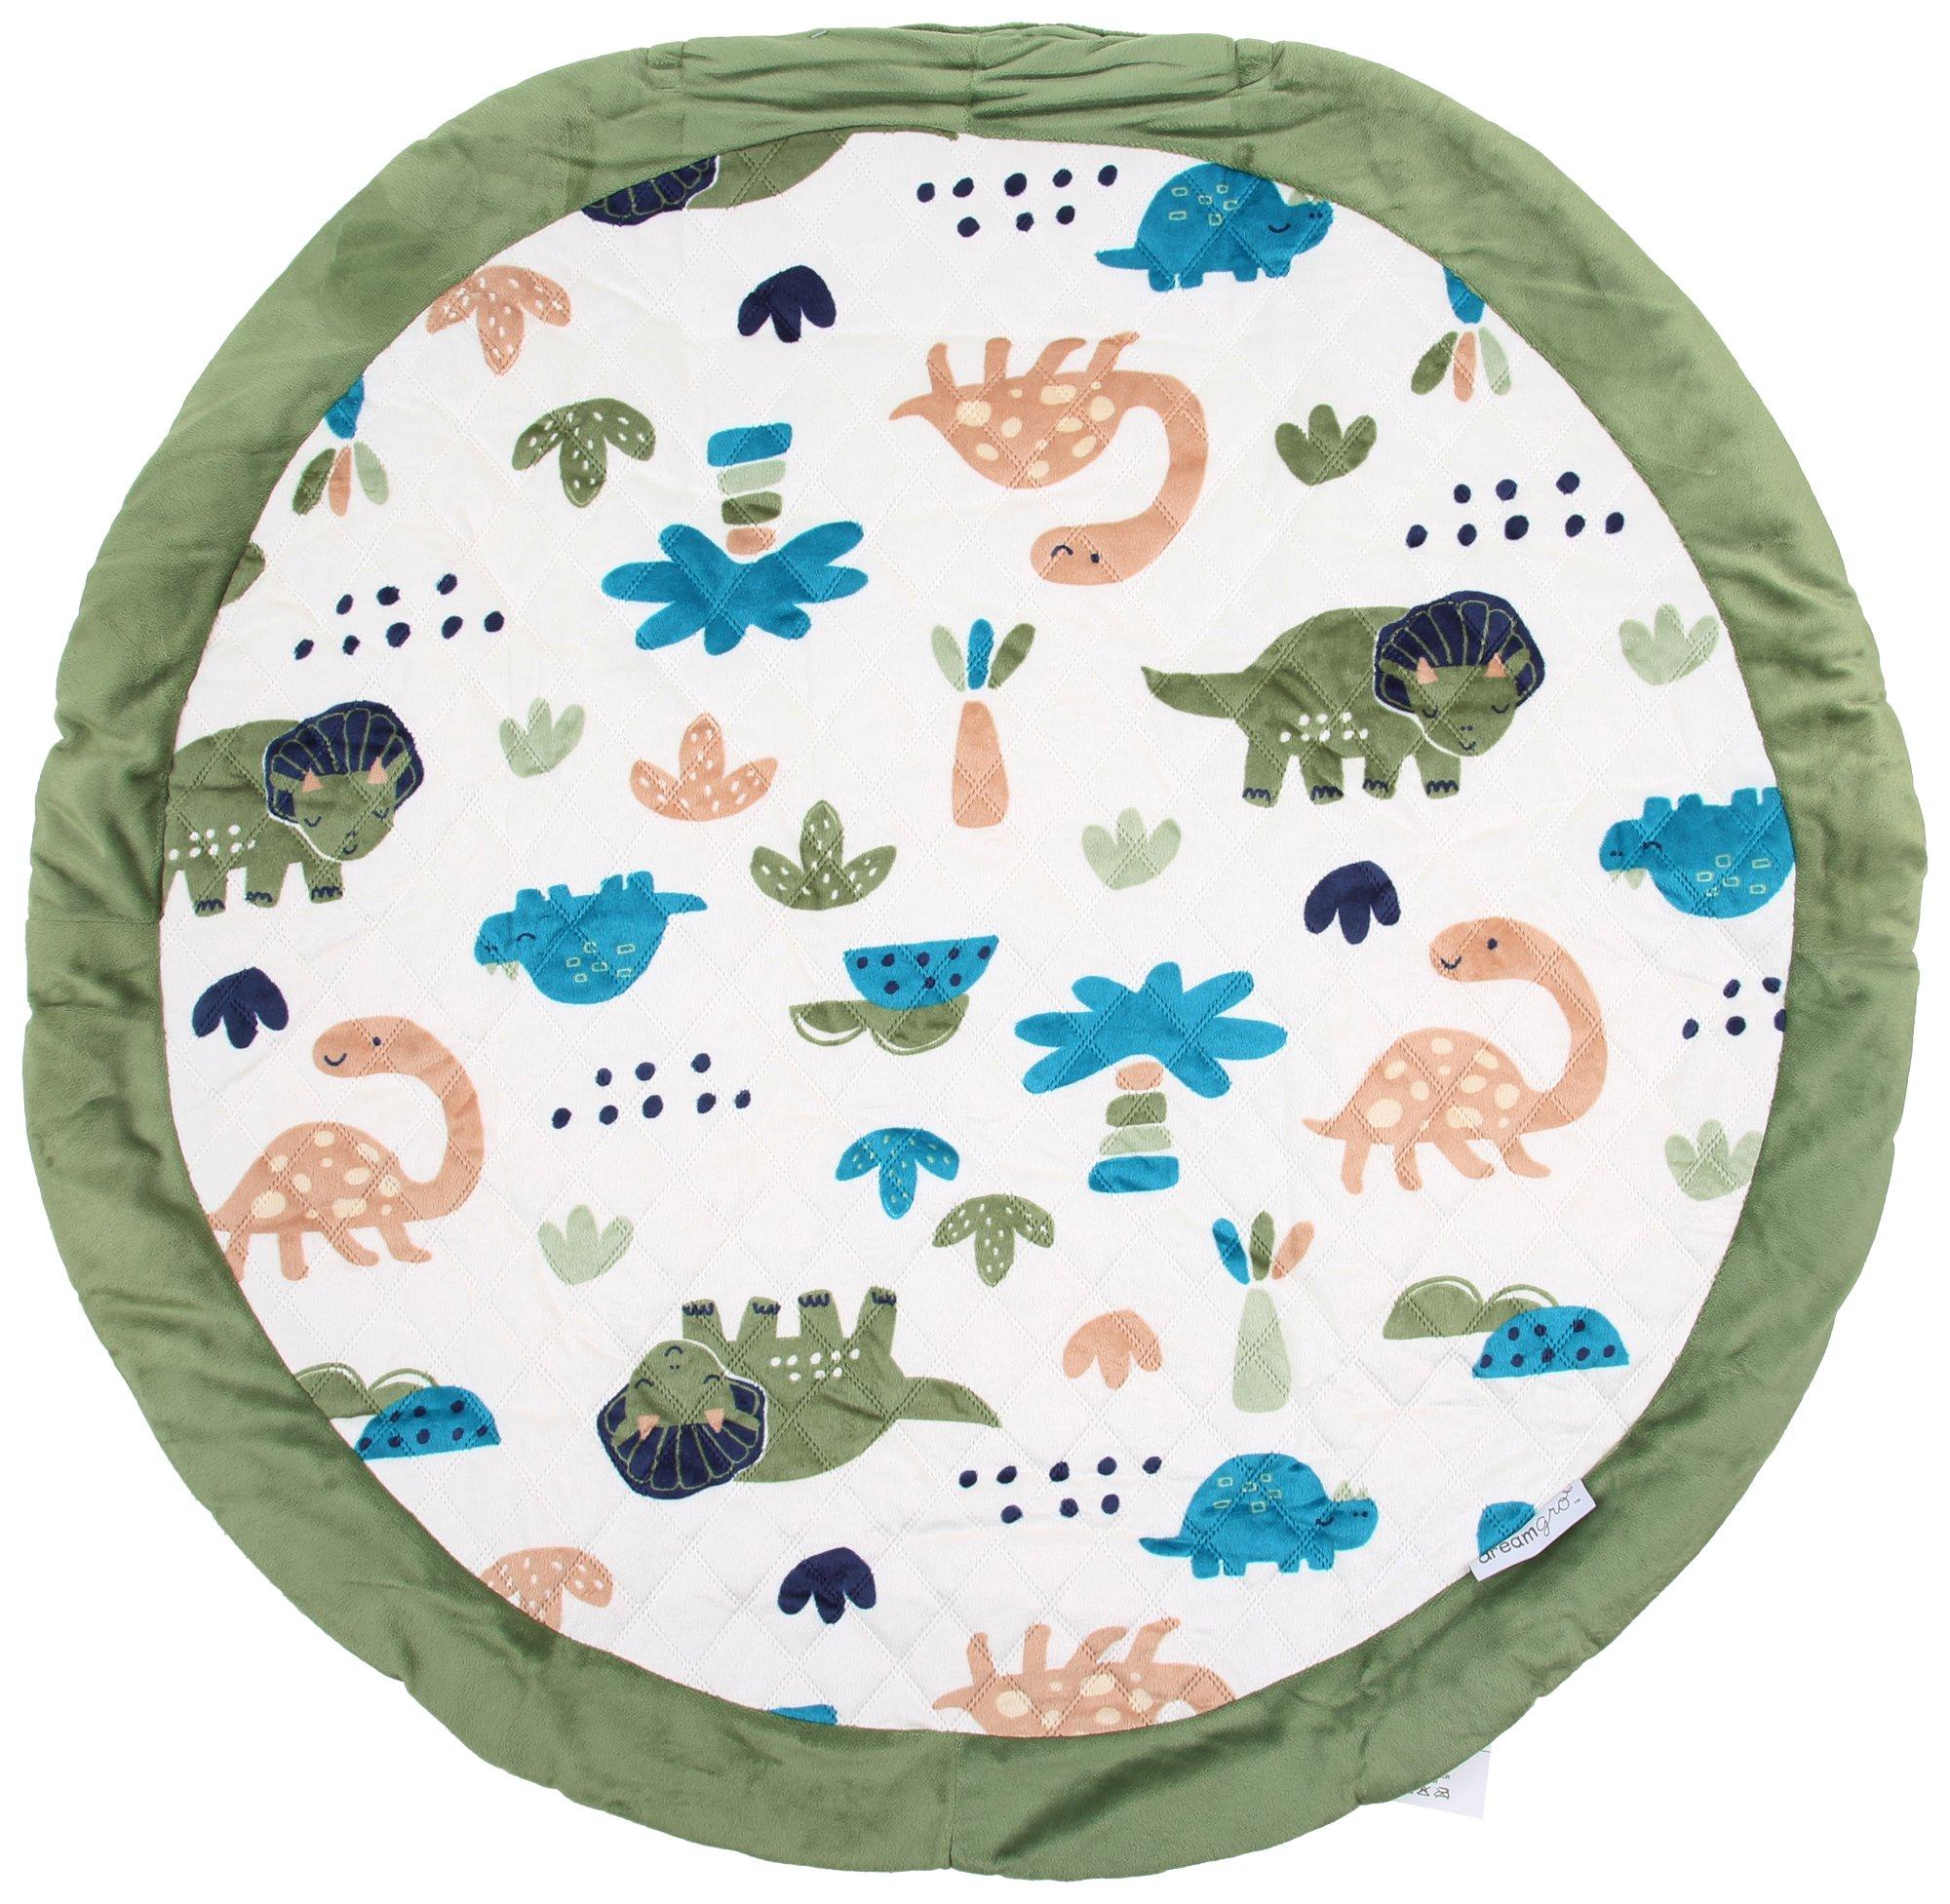 Reversible Dino Print Baby Playmat